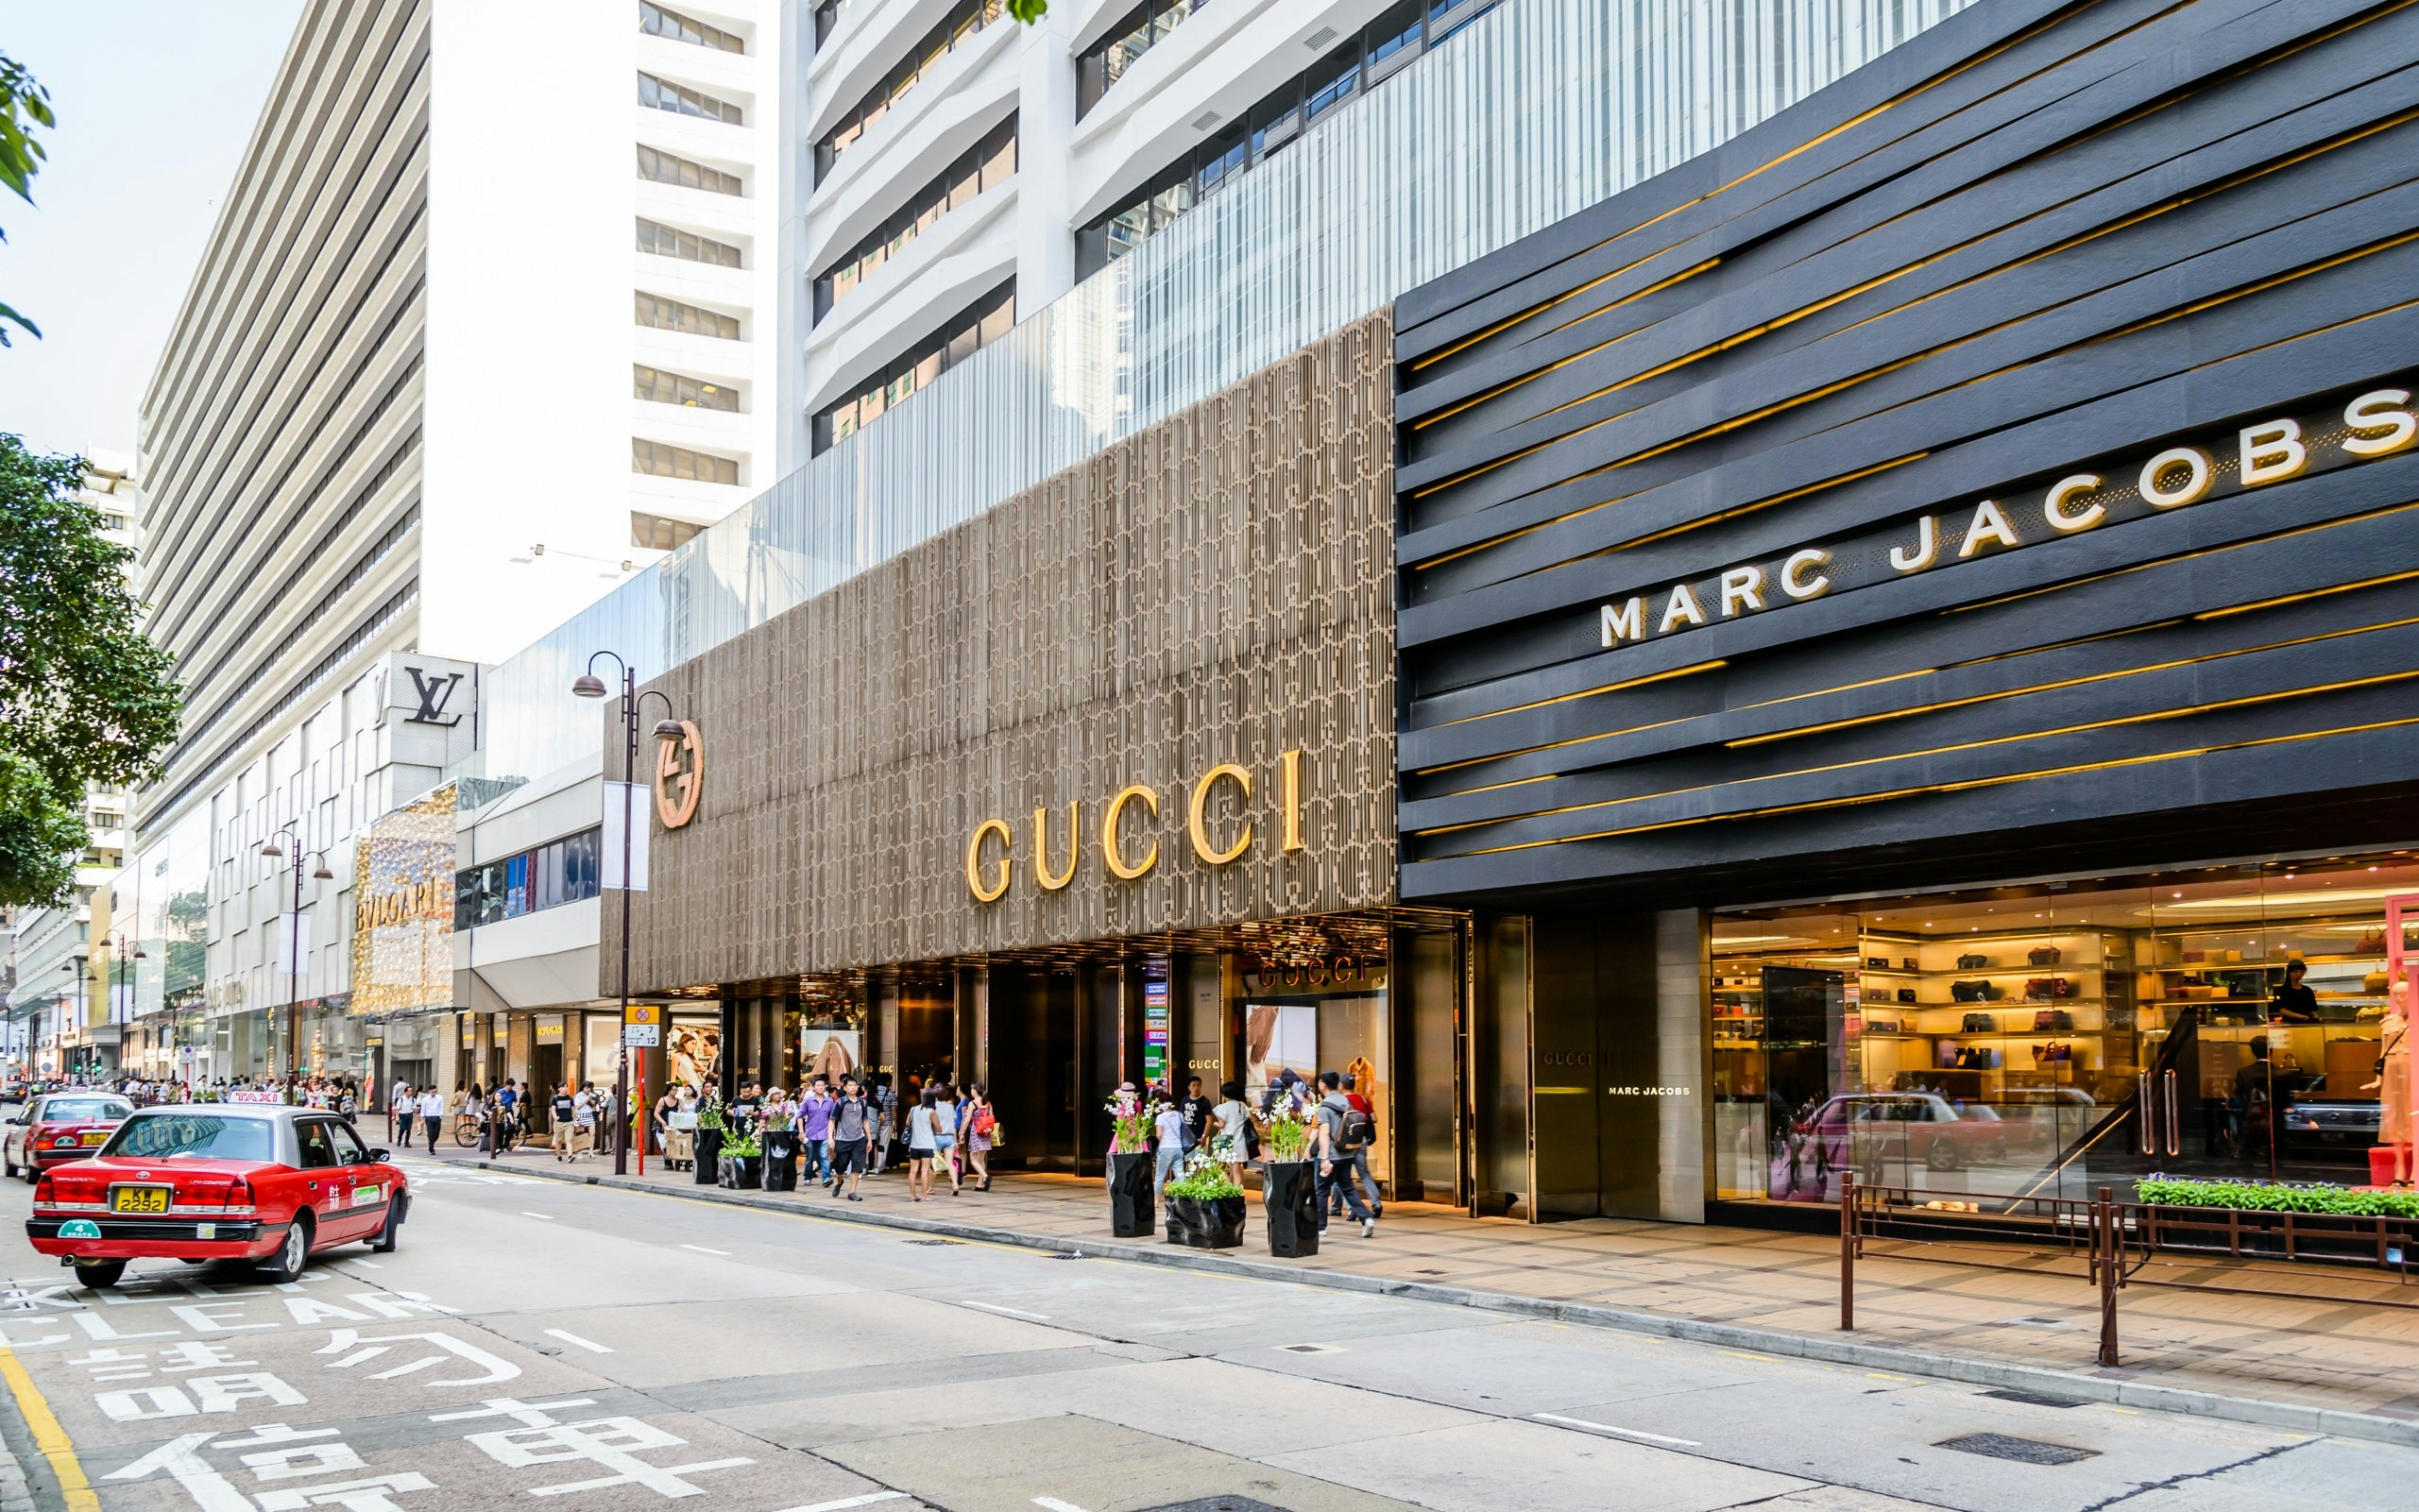 Shopping on Canton Road in Hong Kong. (<a href="http://www.shutterstock.com">Shutterstock</a>)